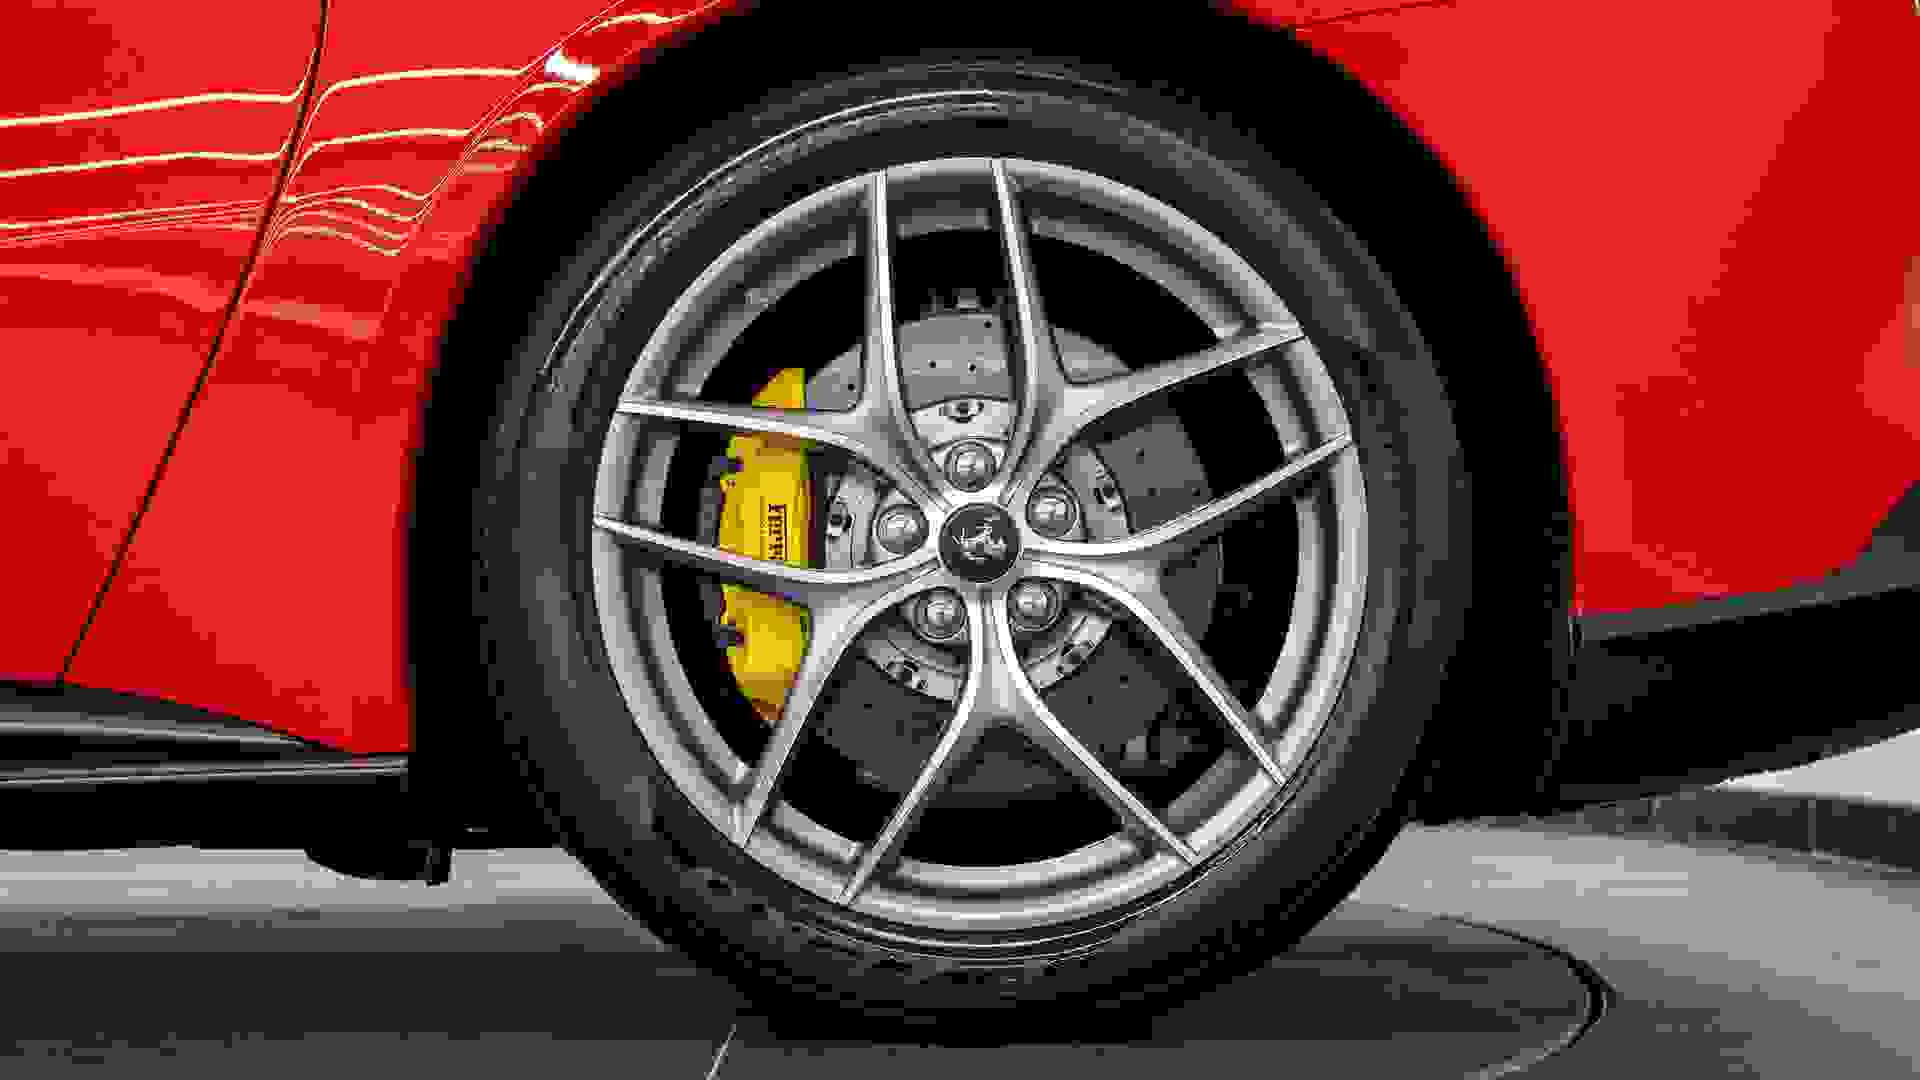 Ferrari F12 Photo 0bb68cd5-113c-4379-aff9-b679a07036b3.jpg